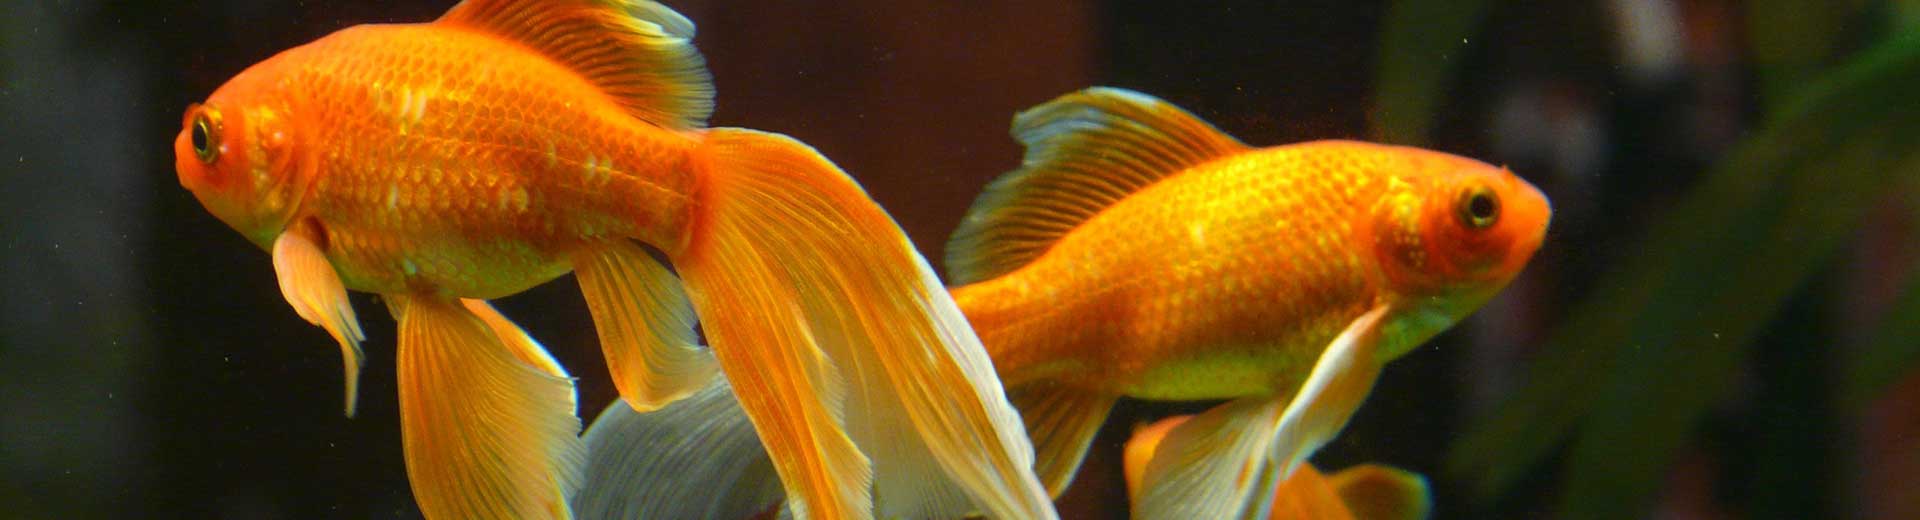 Andere dieren - goudvis